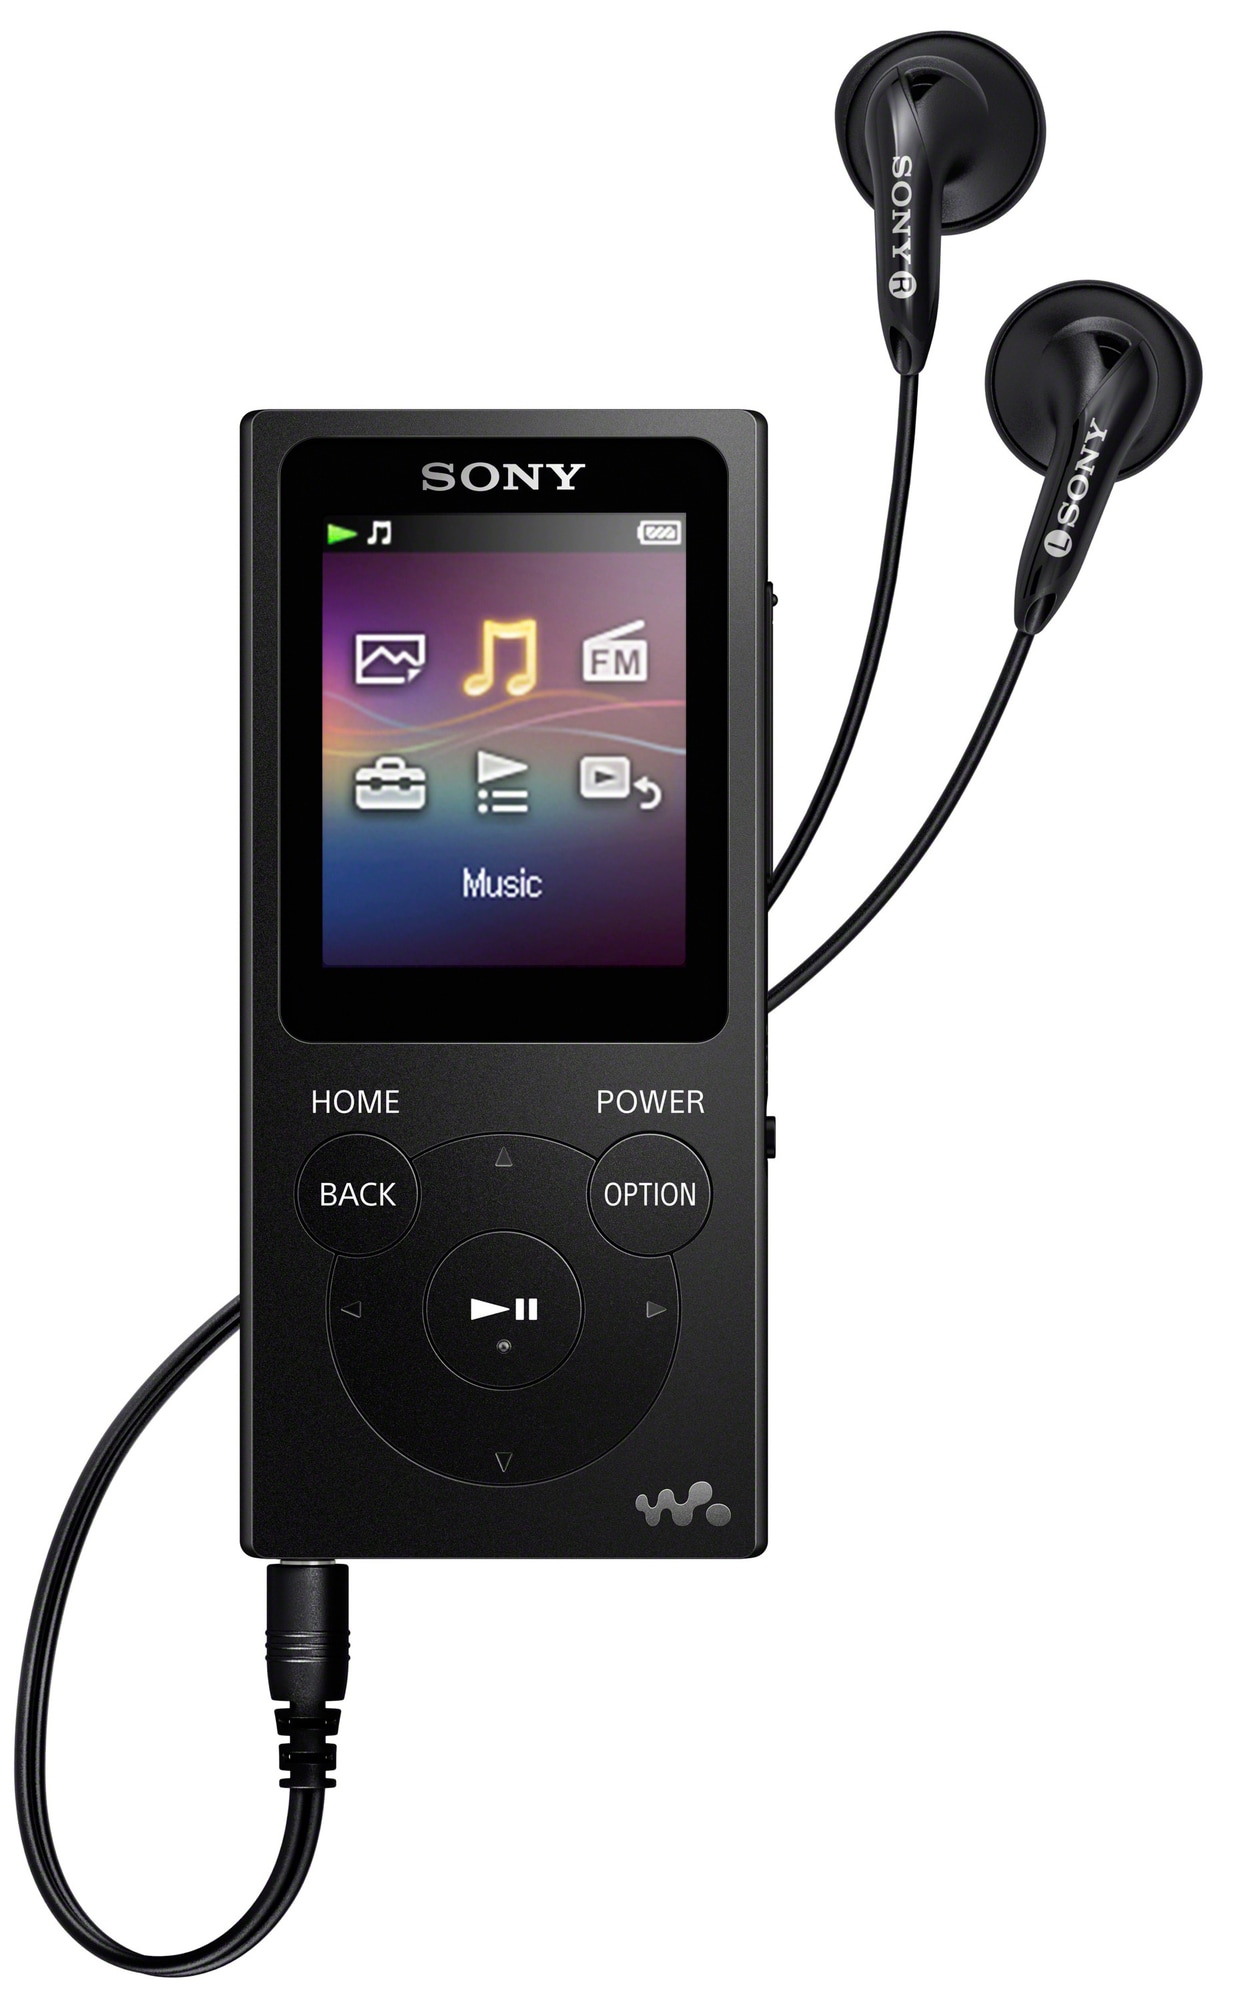 Sony Walkman 8 GB NWZ-E394 - sort - IPod & MP3 afspiller - Elgiganten